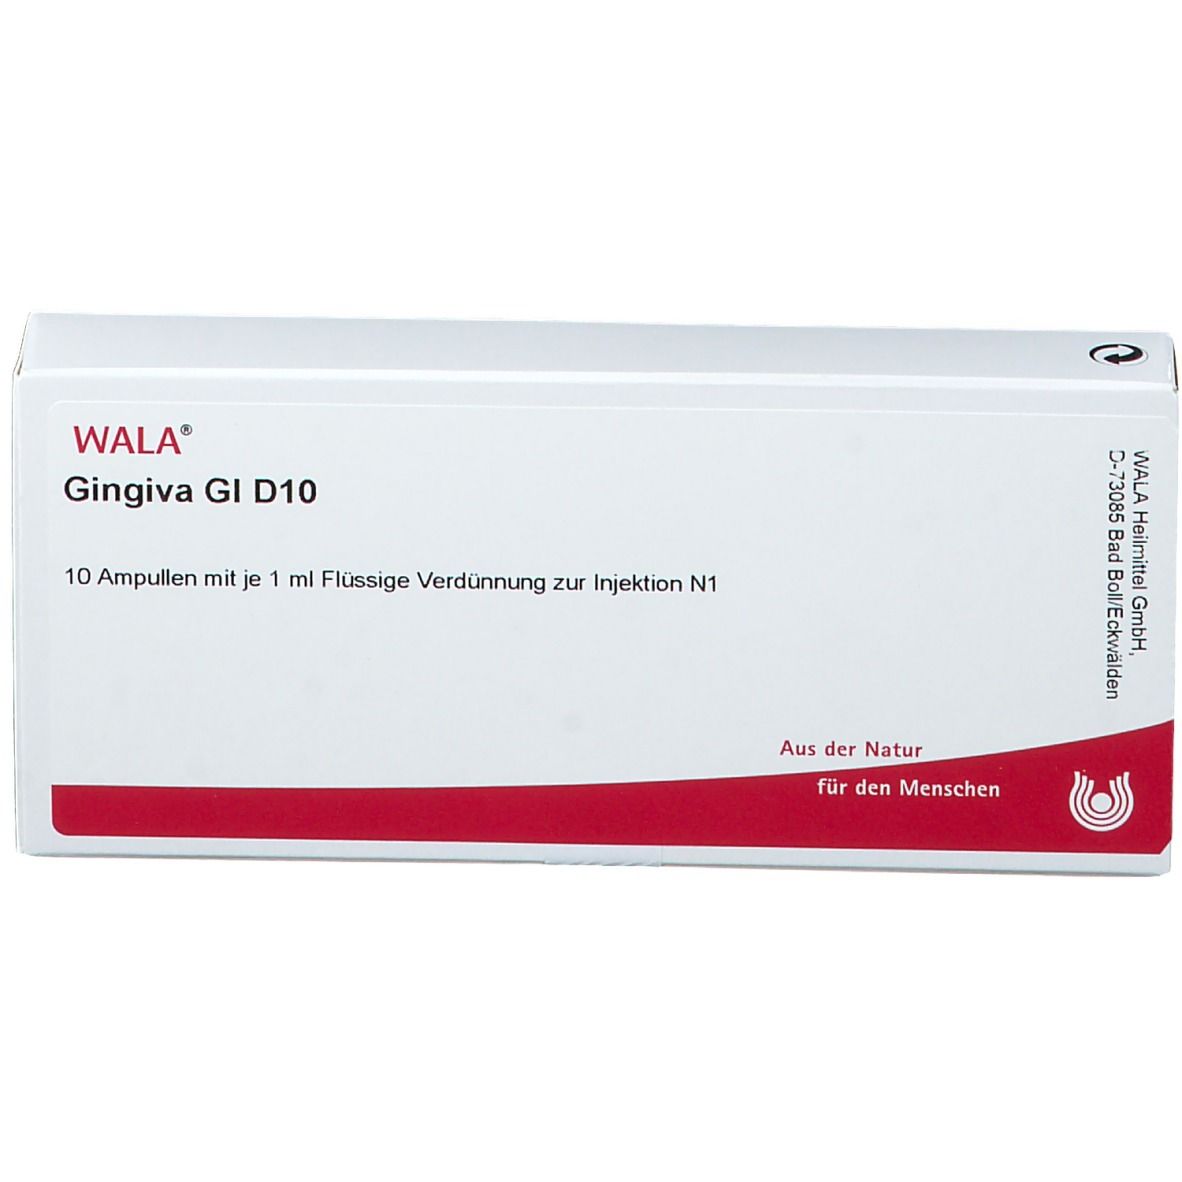 WALA® Gingiva Gl D 10